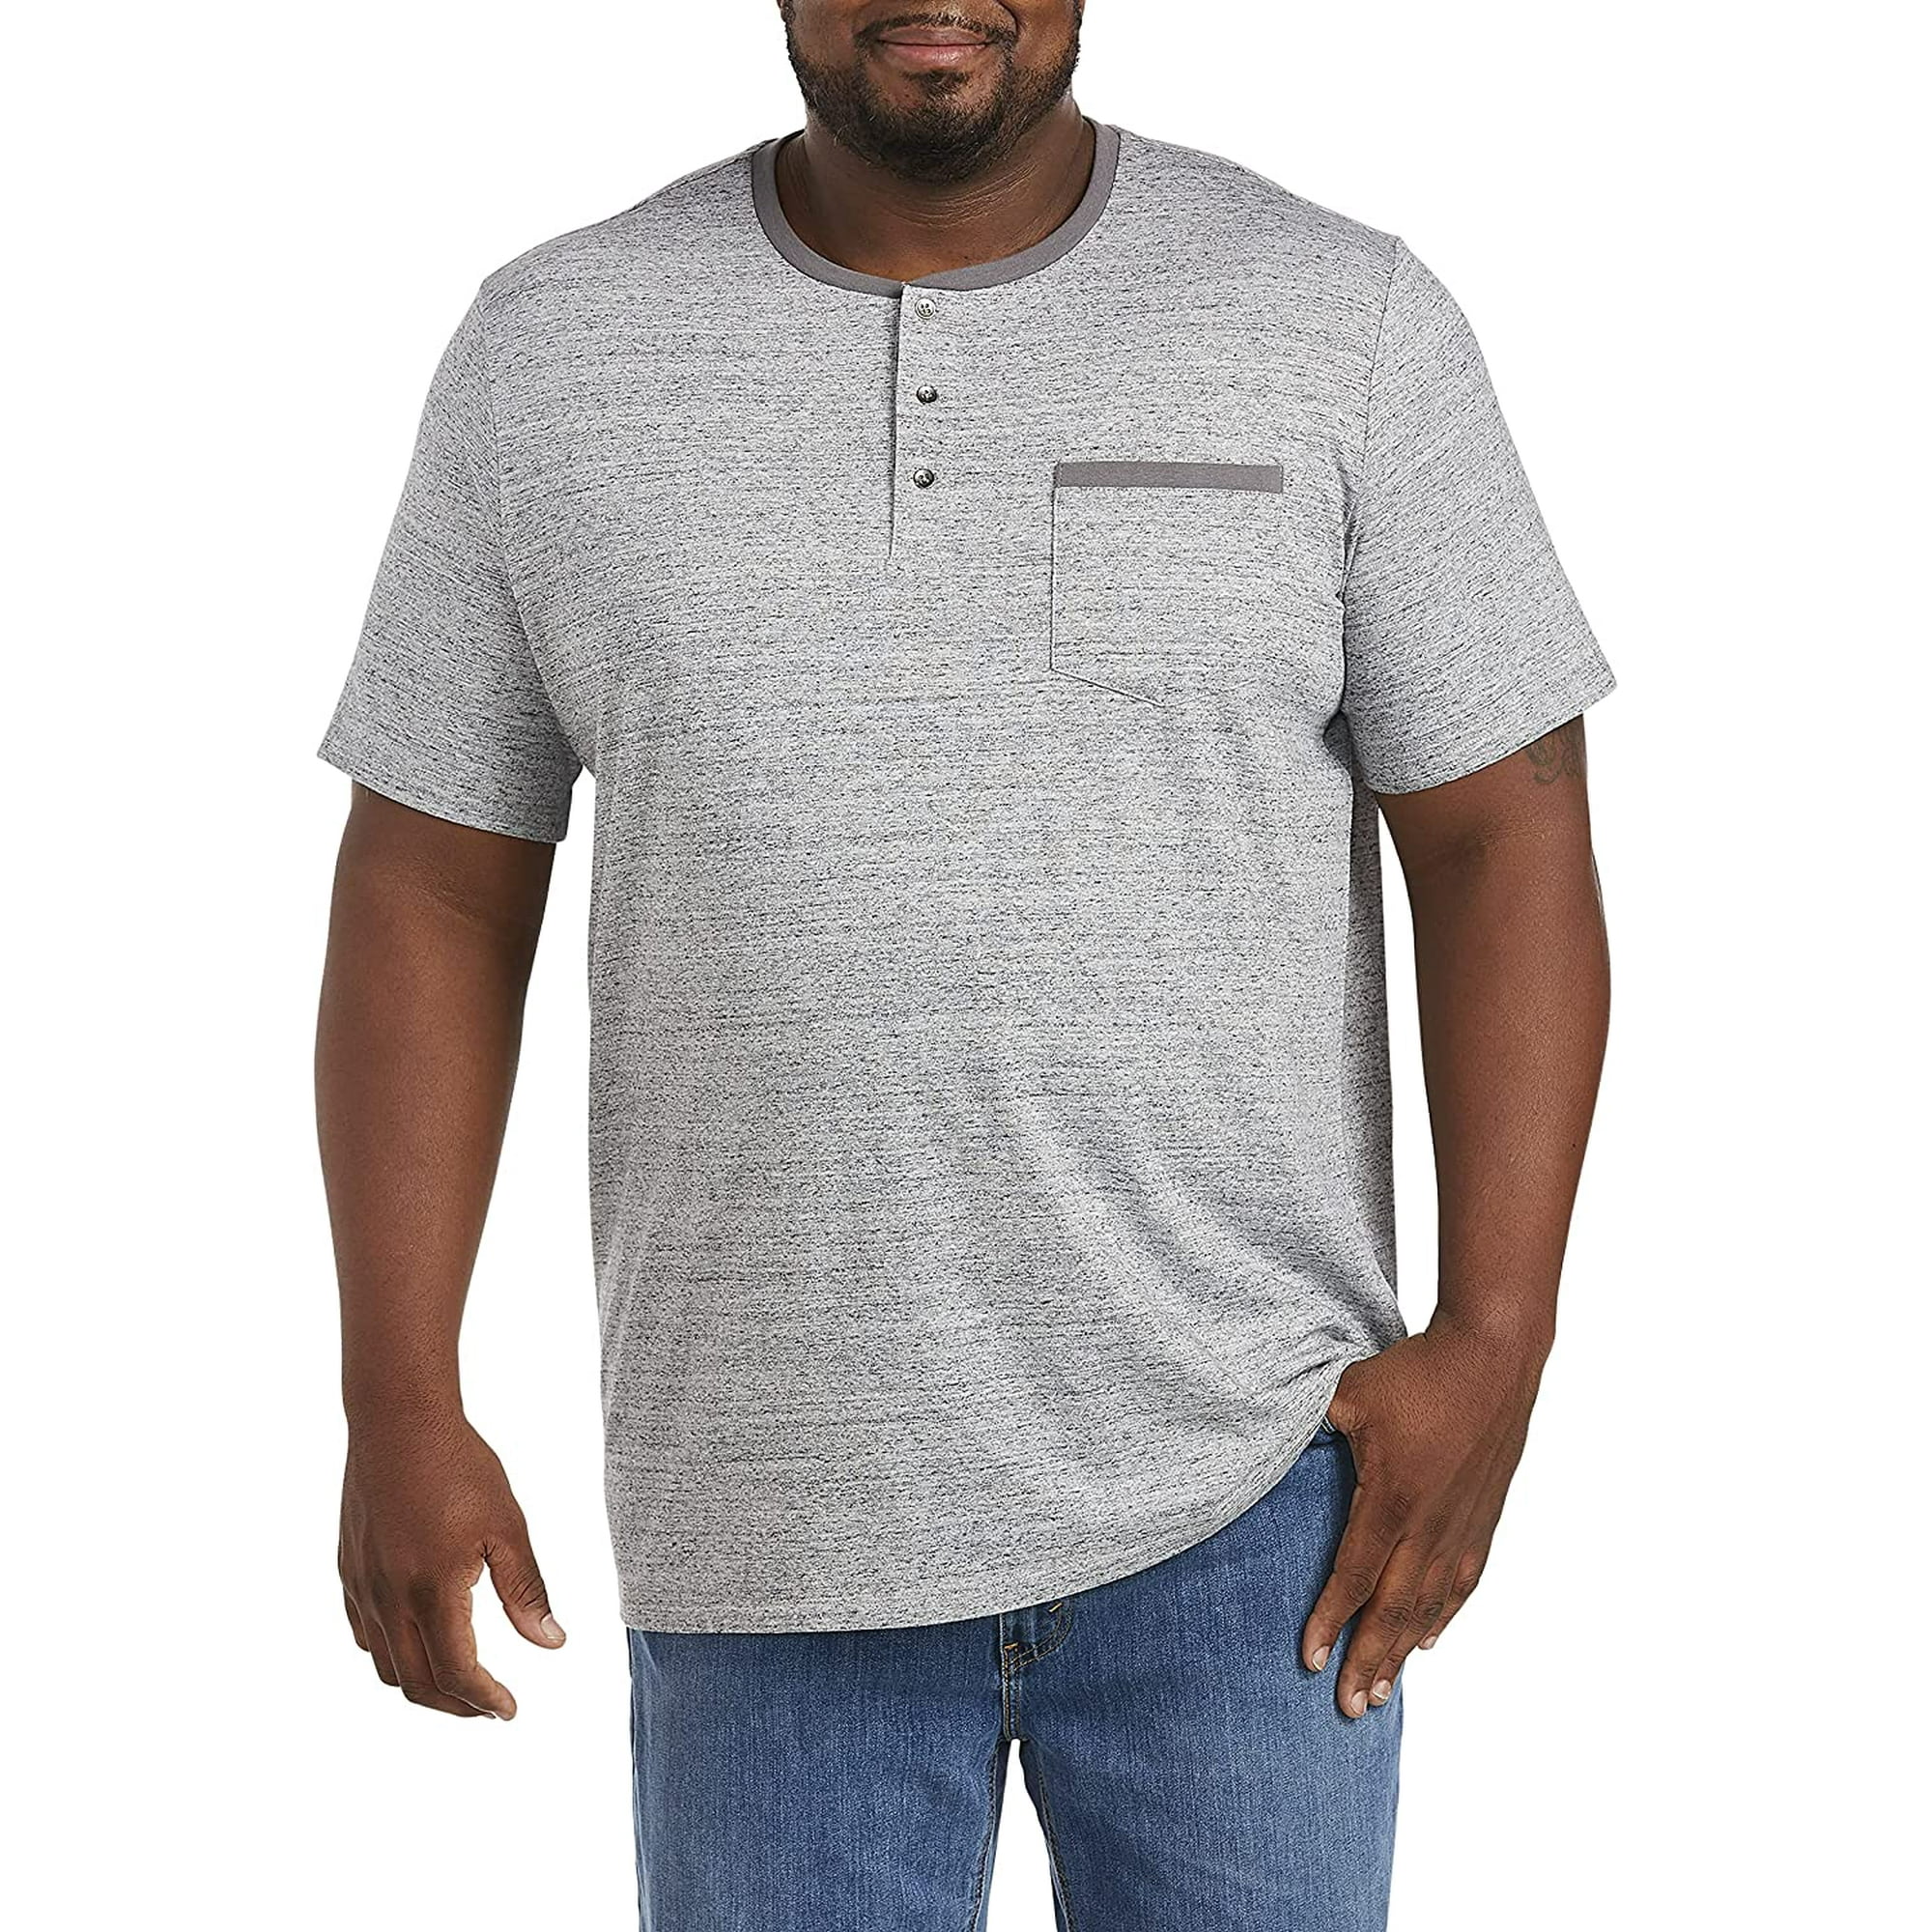 Harbor Bay by DXL Men's Big and Tall Slub Knit V-Neck T-Shirt